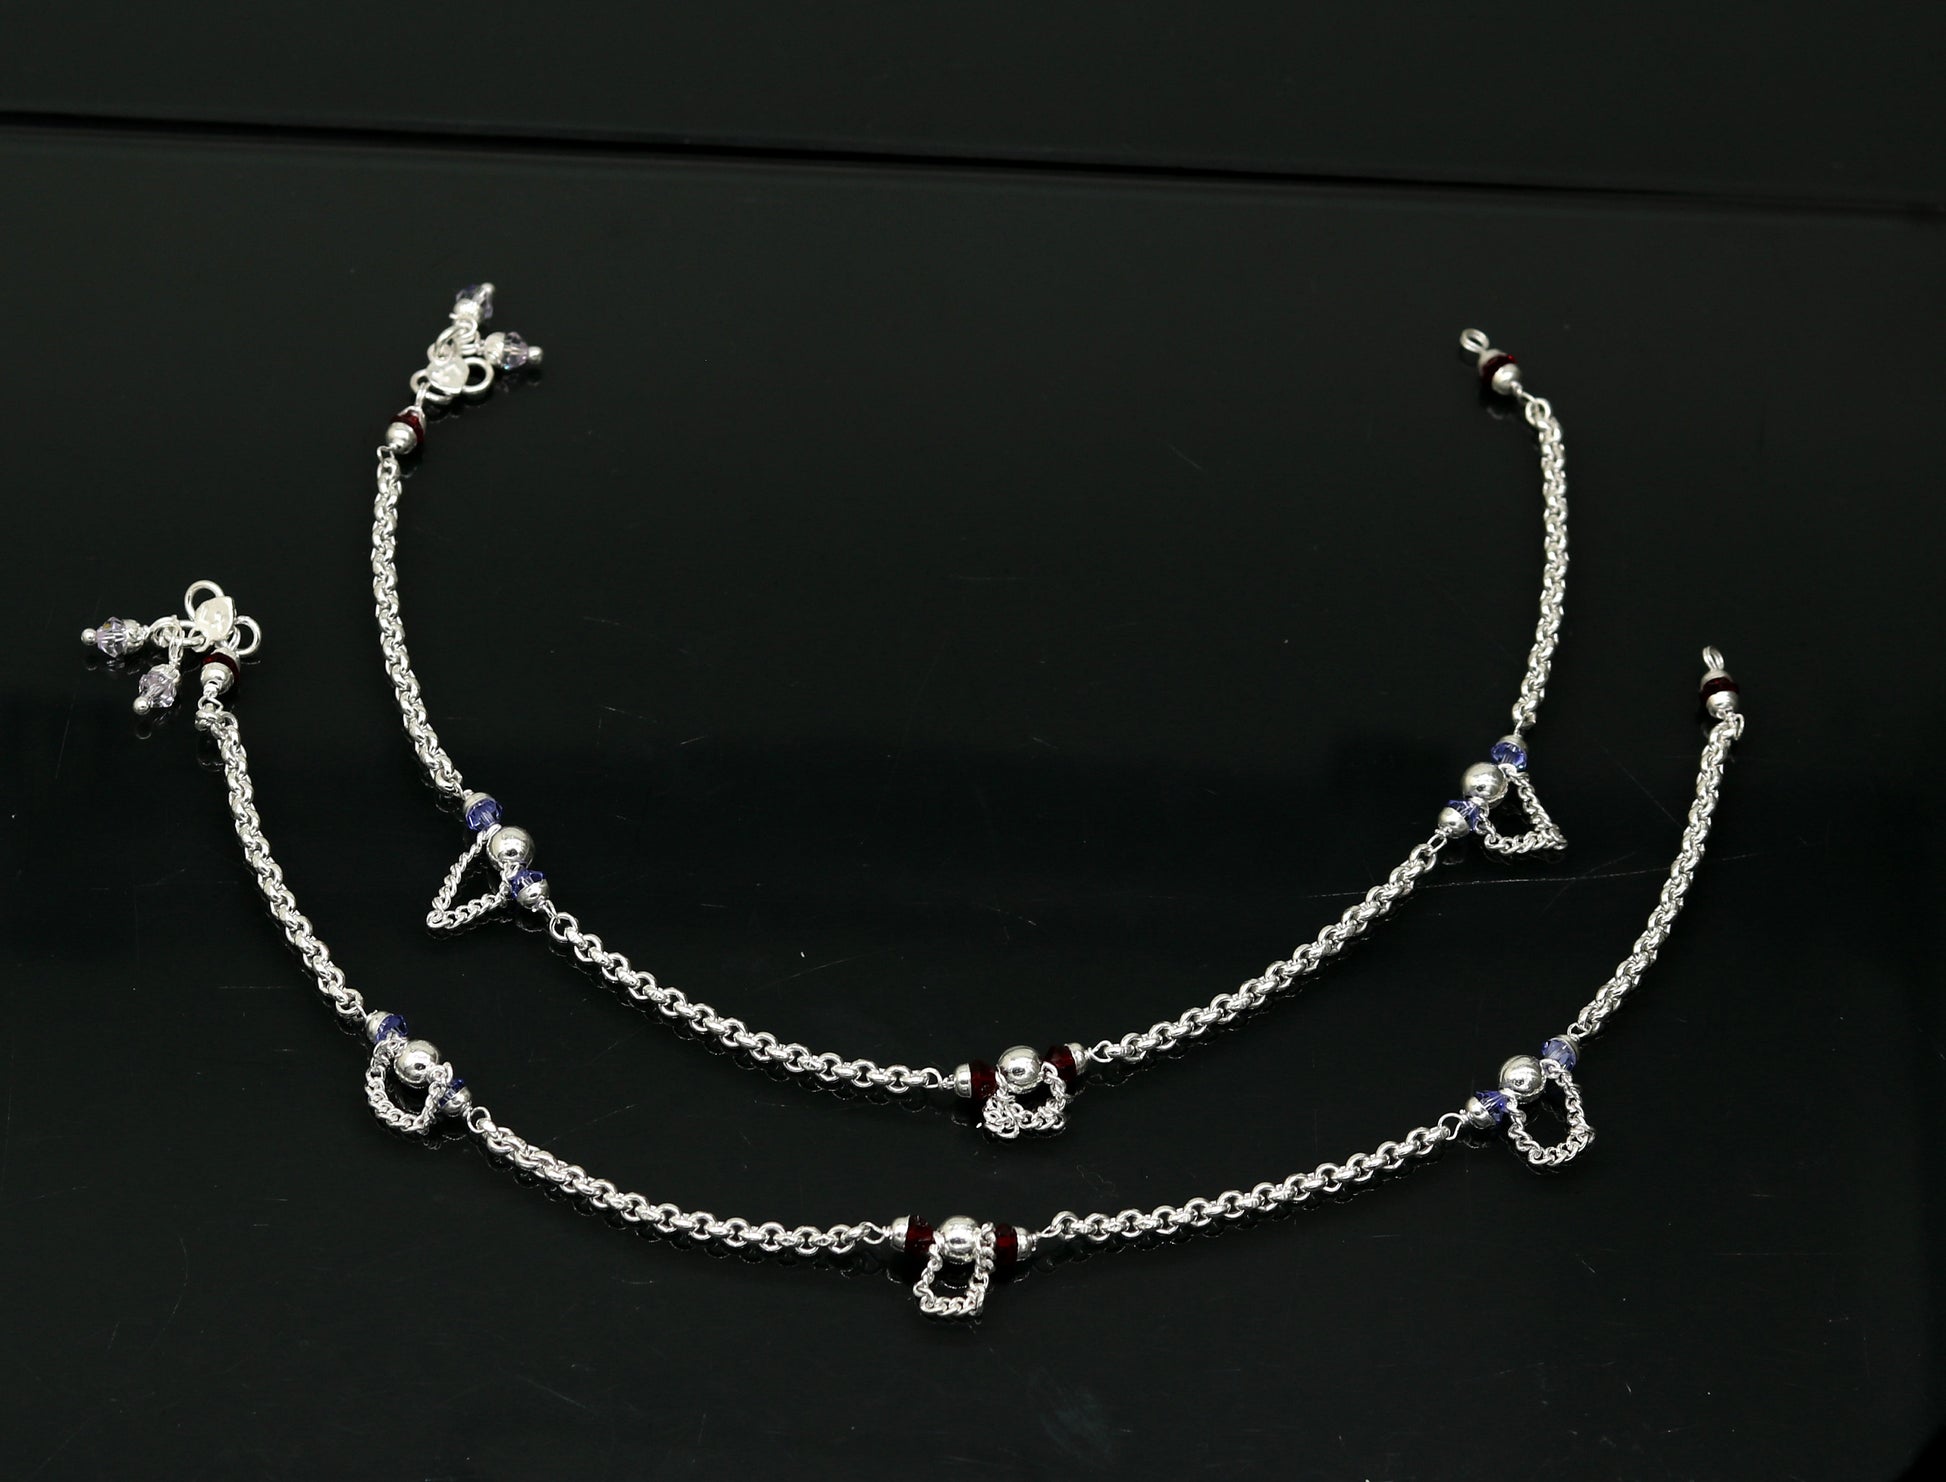 10.0" 925 sterling silver handmade rolo chain beaded anklet bracelet, foot bracelet, fabulous ankle chain bracelet belly dance nank218 - TRIBAL ORNAMENTS